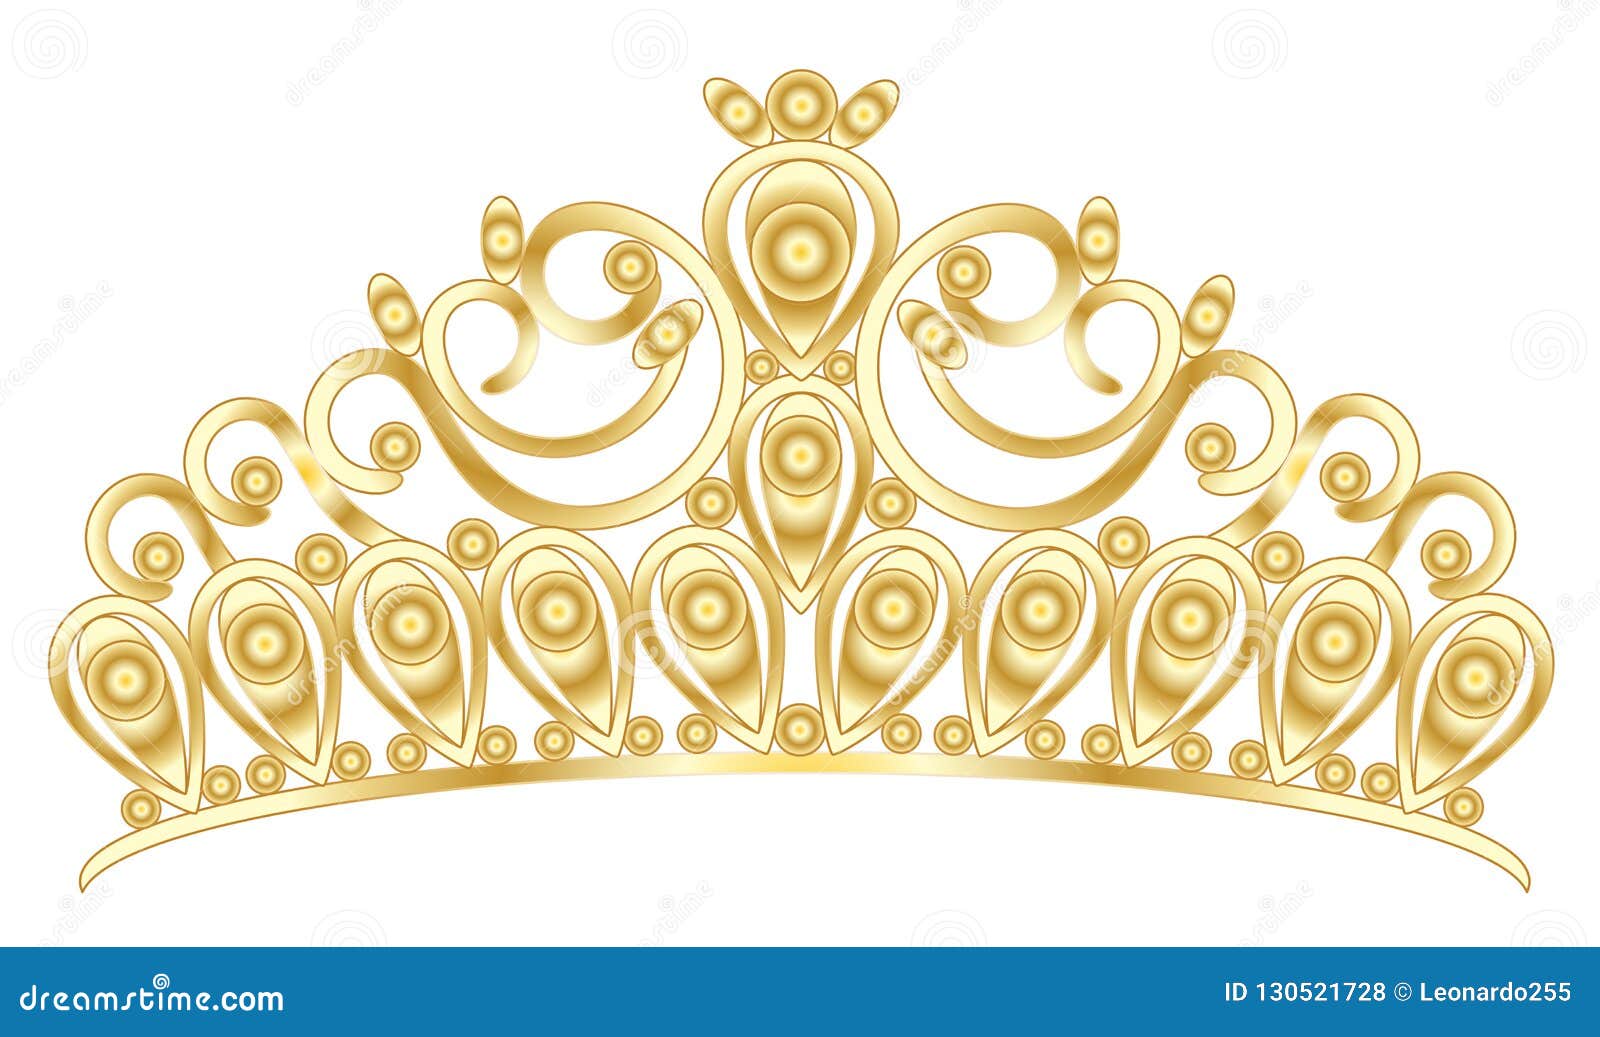 gold tiara crown women`s wedding with stones